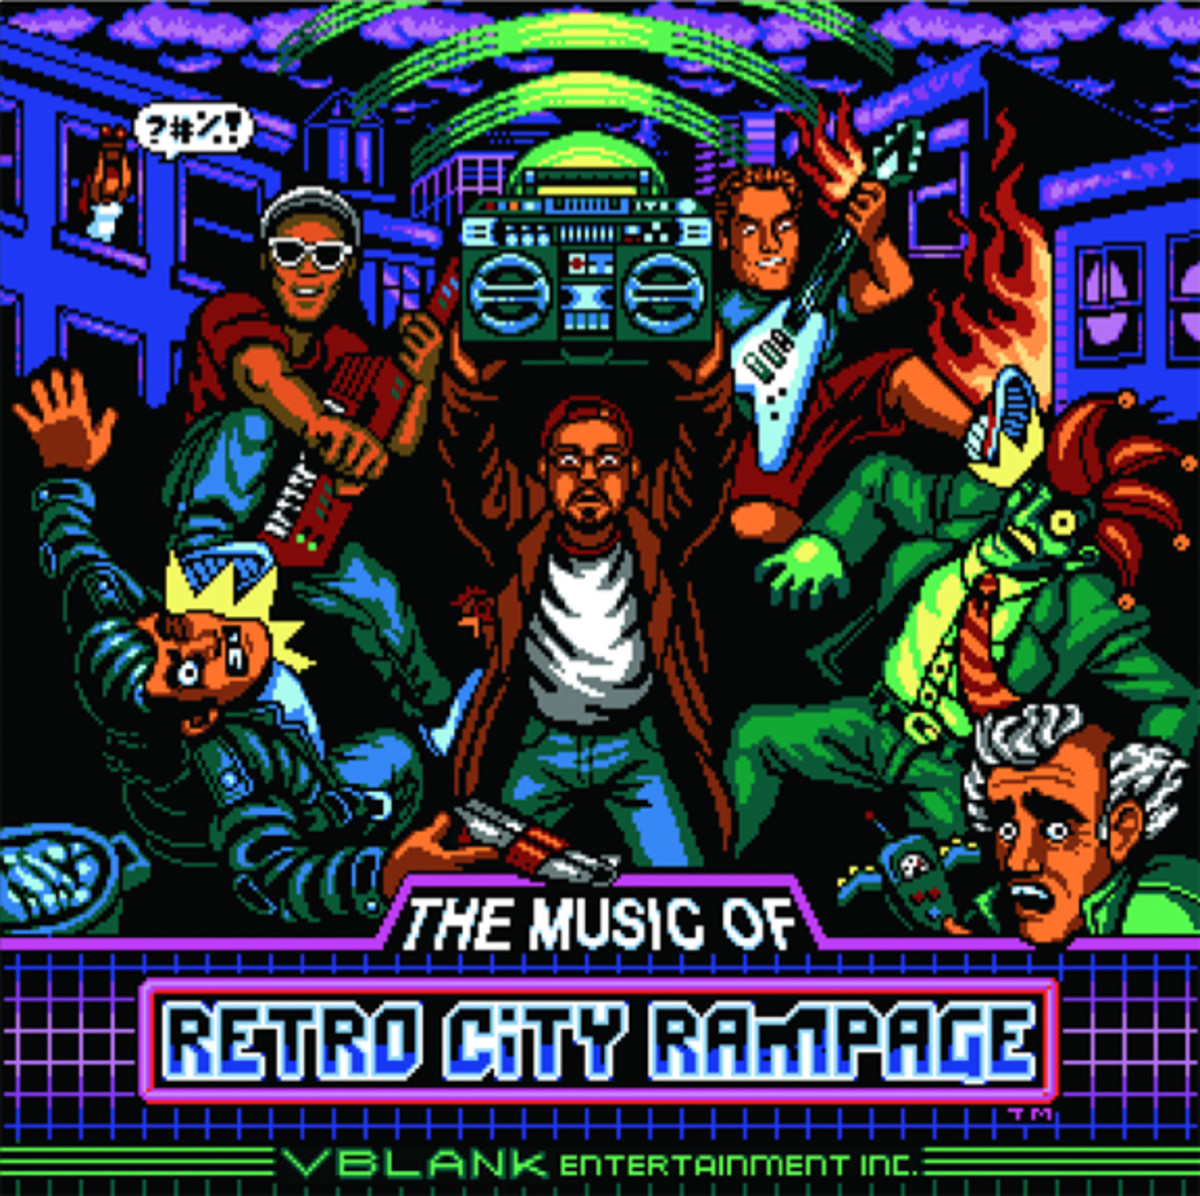 Retro City Rampage soundtrack on vinyl